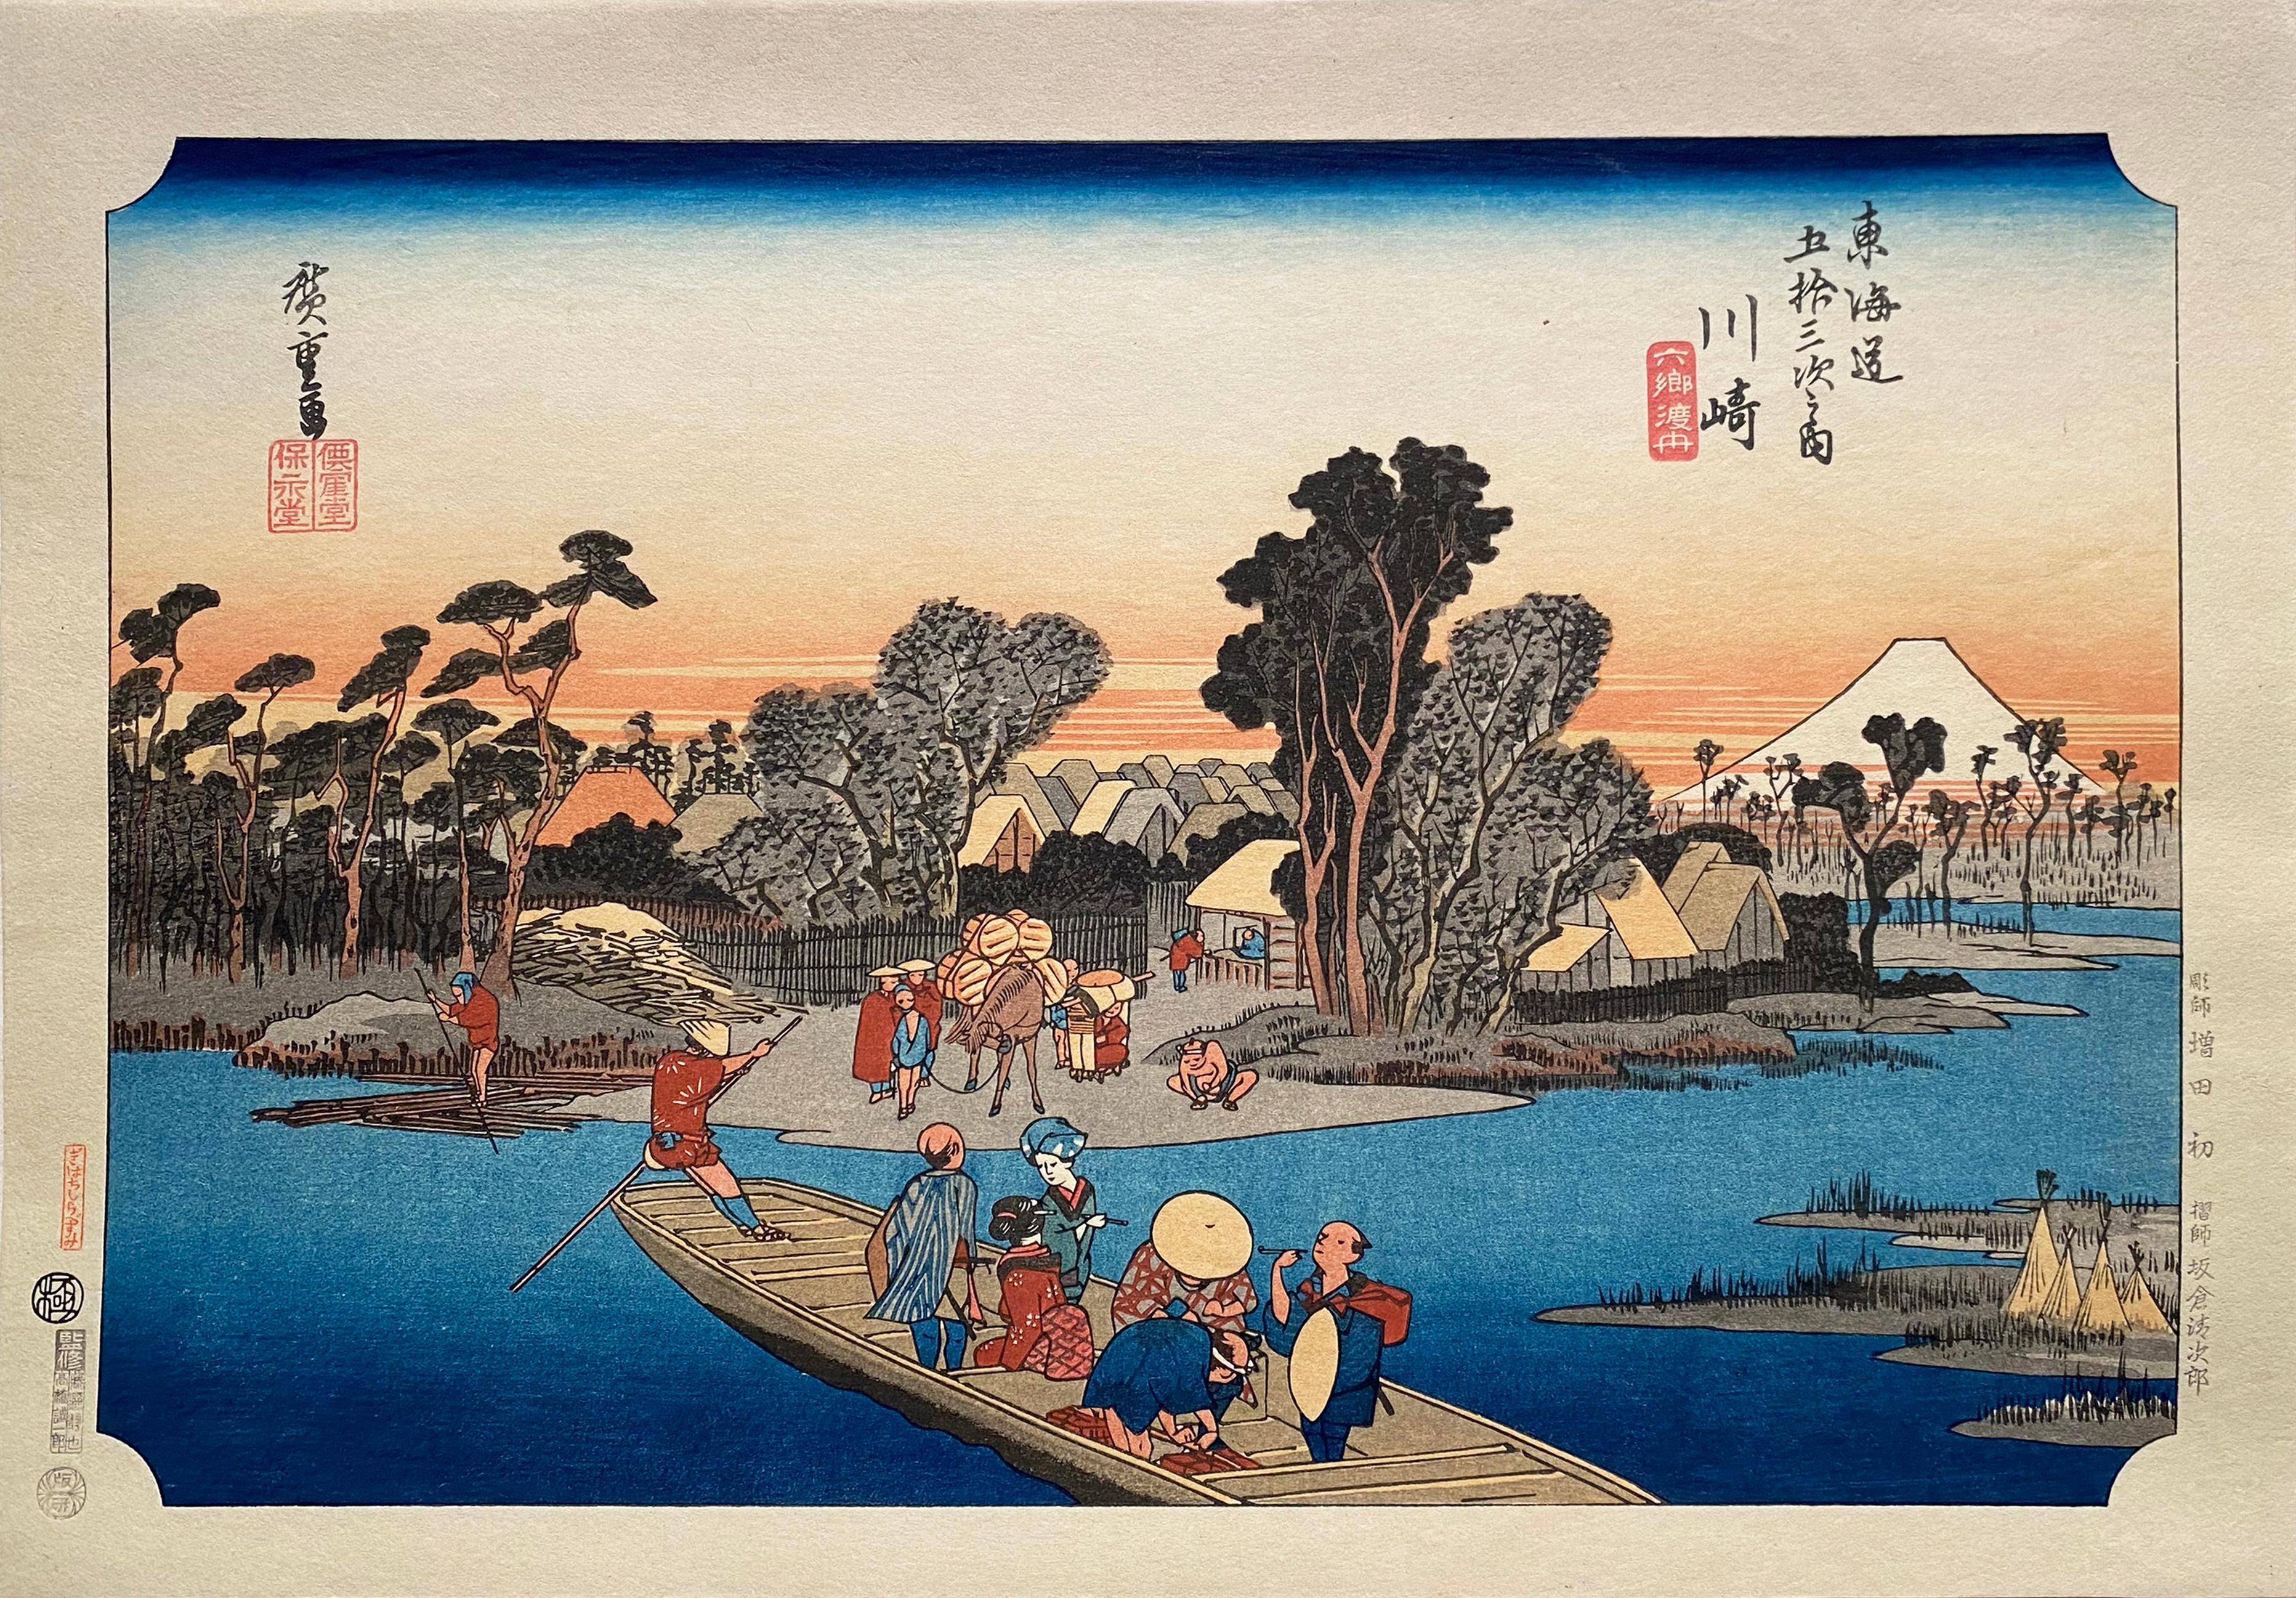 'A View of Kawasaki', After Utagawa Hiroshige, Ukiyo-e Woodblock, Tokaido, Edo